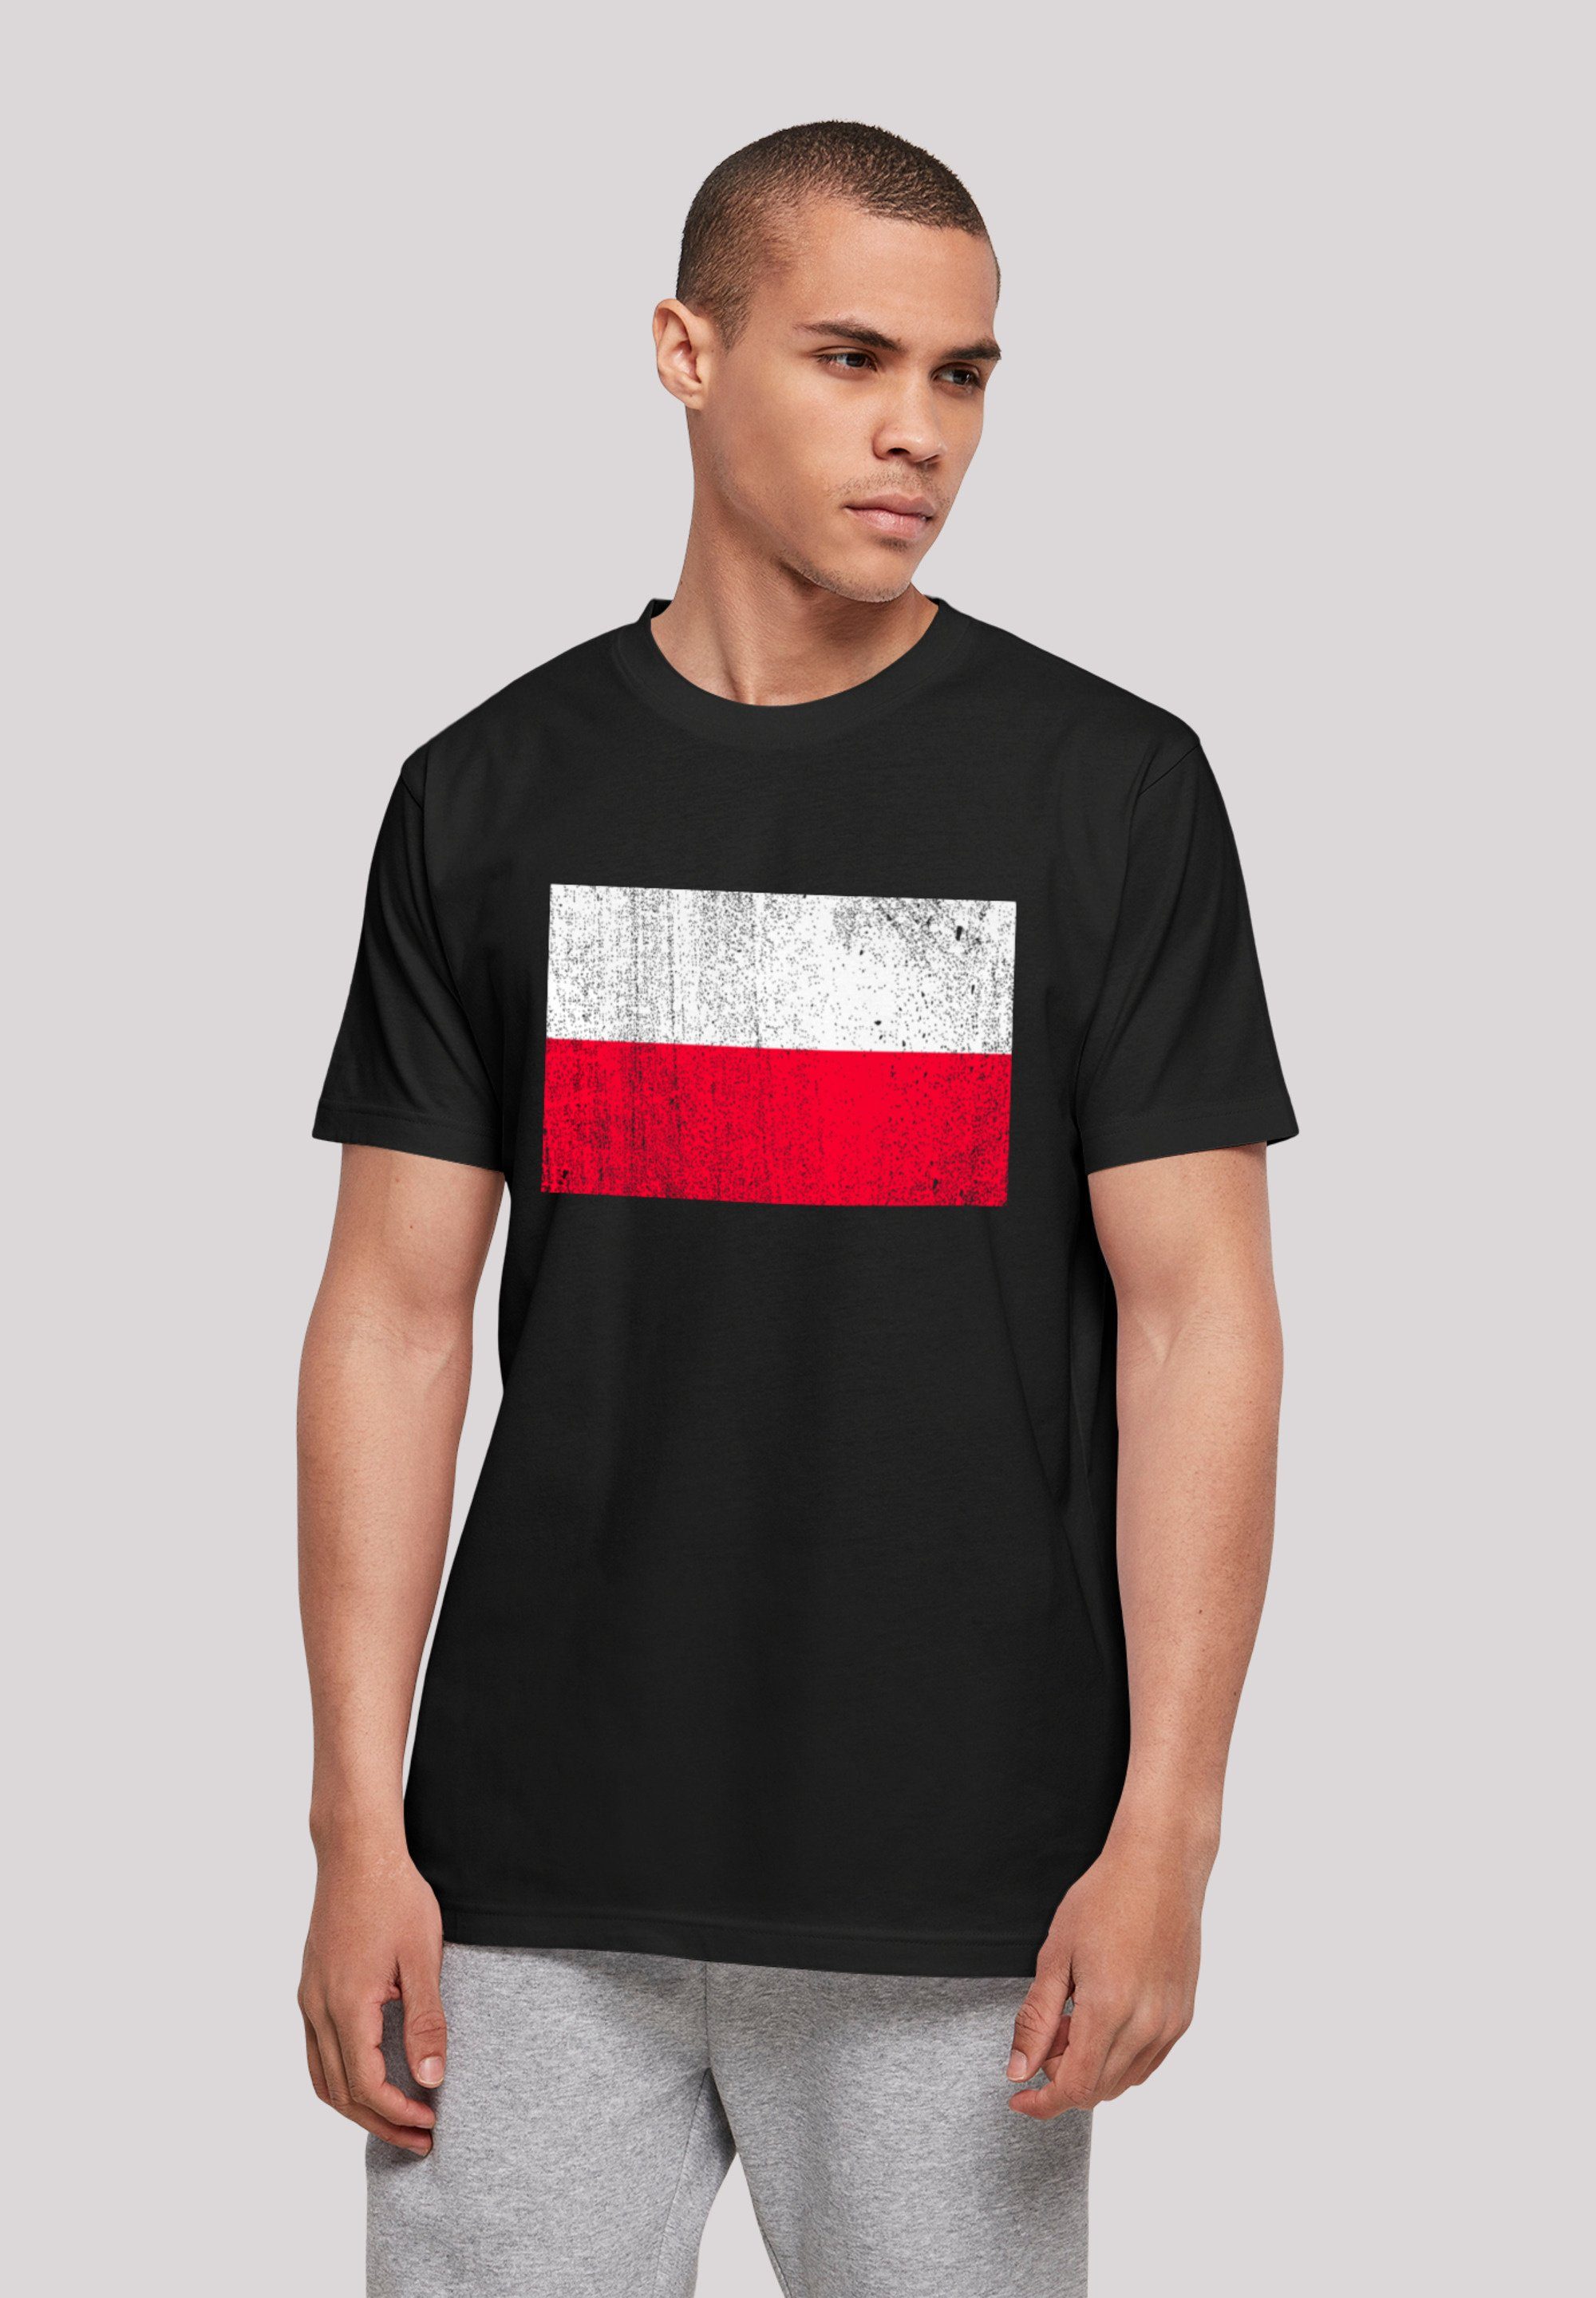 F4NT4STIC T-Shirt Polen Poland schwarz Flagge distressed Print